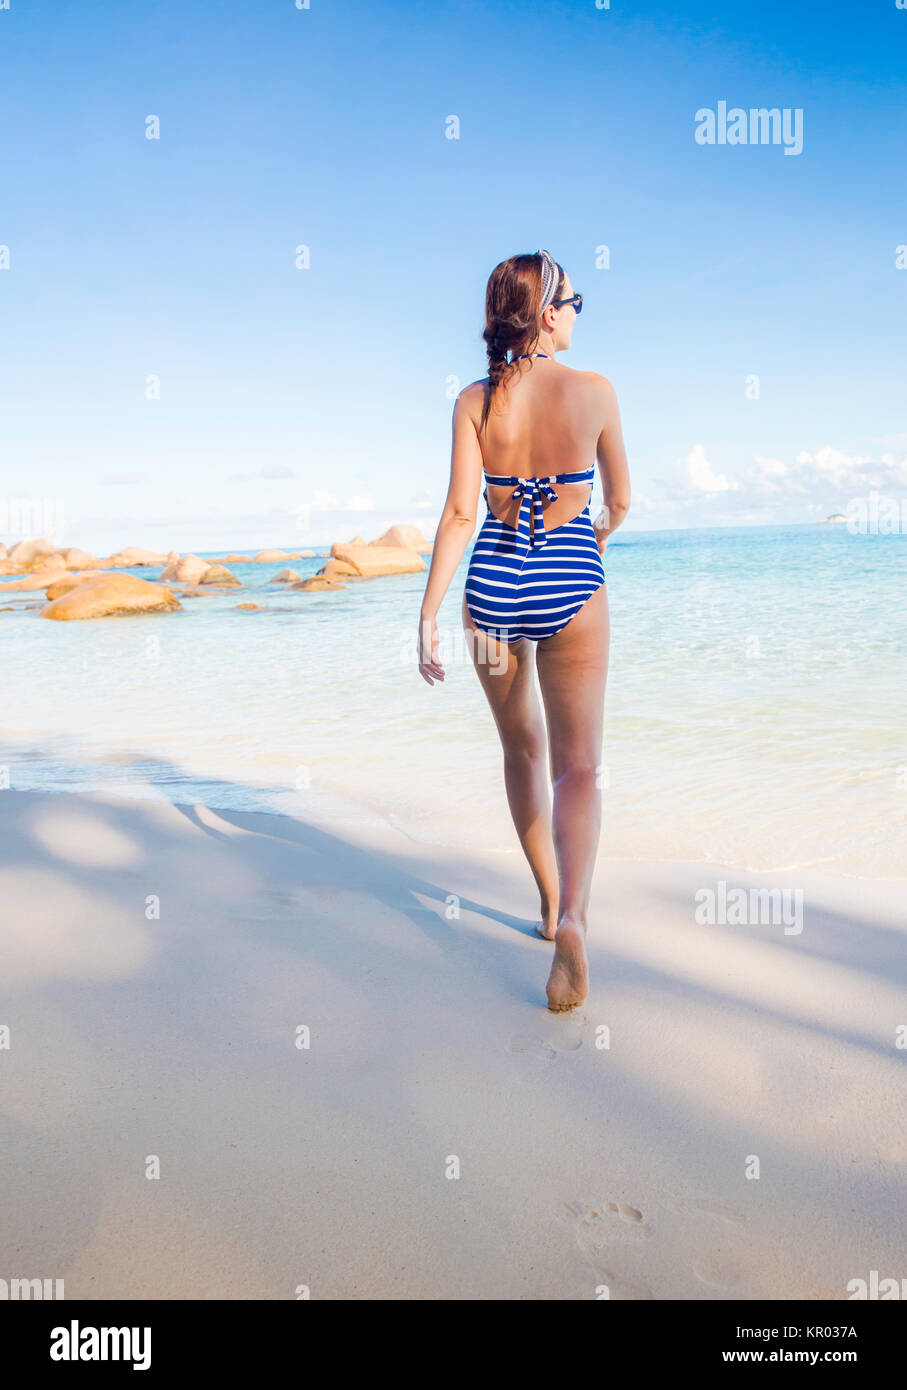 A beautiful woman walking on the beach Stock Photo